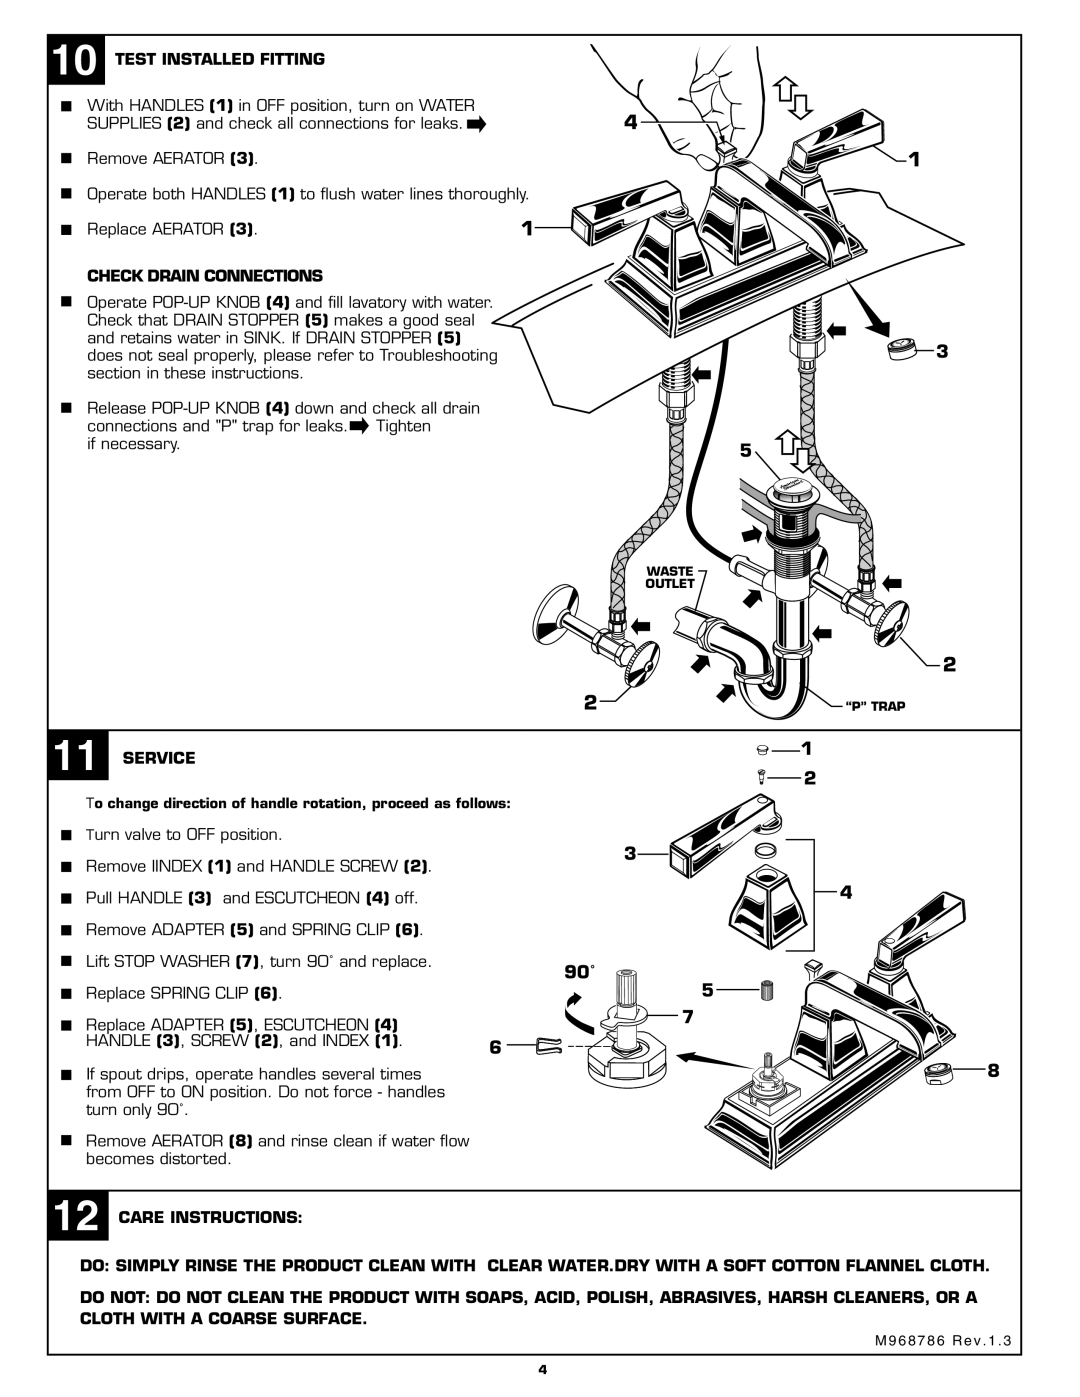 American Standard 2555.201 installation instructions 